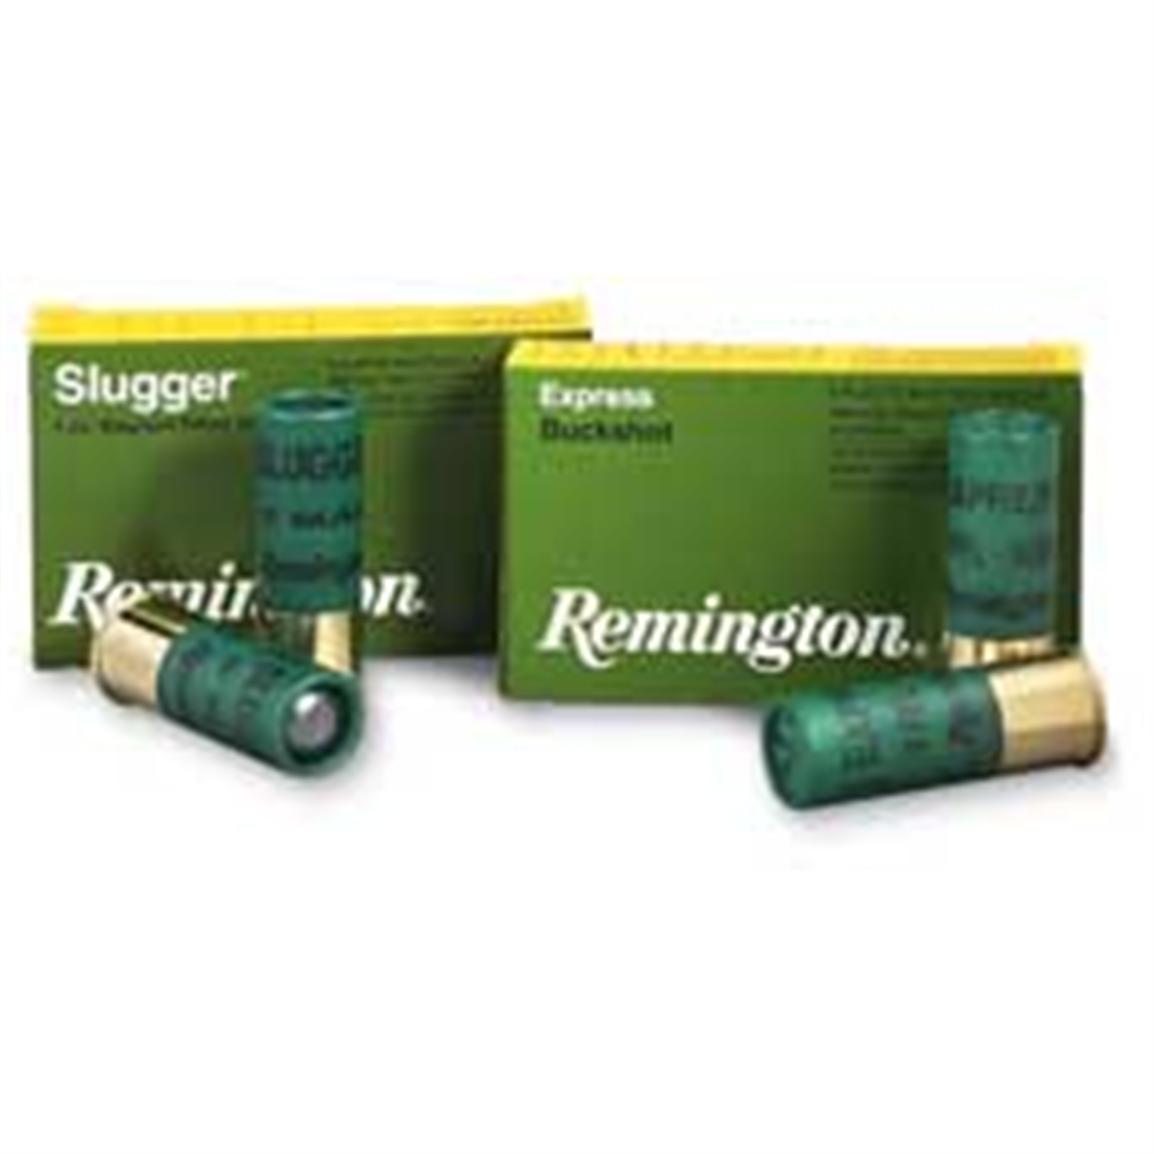 Remington, 2 3/4" 20 Gauge, 5/8 oz. Slug, 250 Rounds